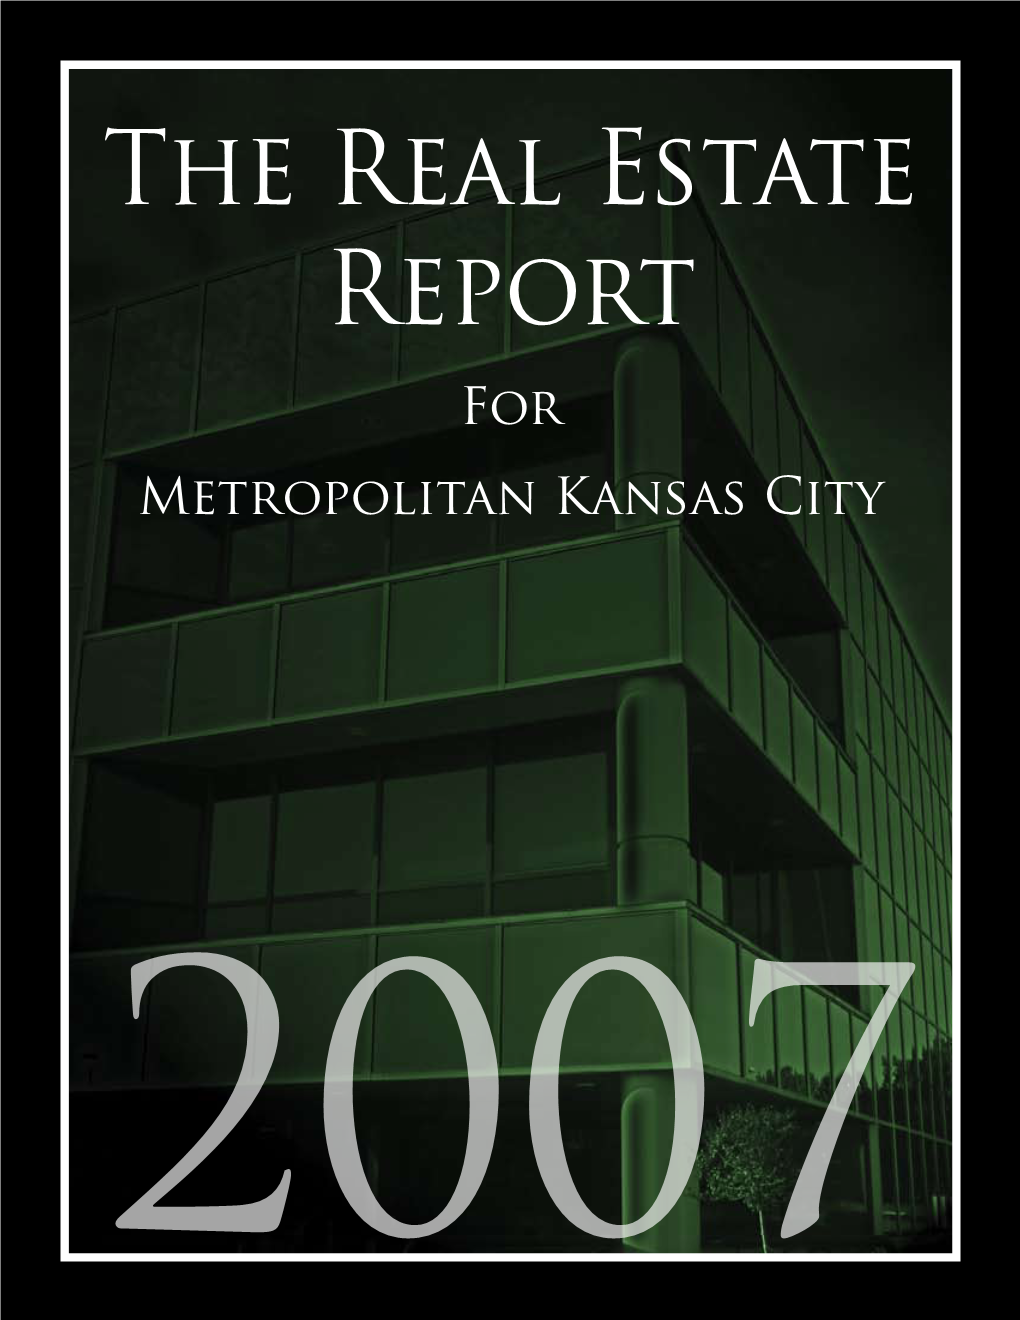 The Real Estate Report for Metropolitan Kansas City